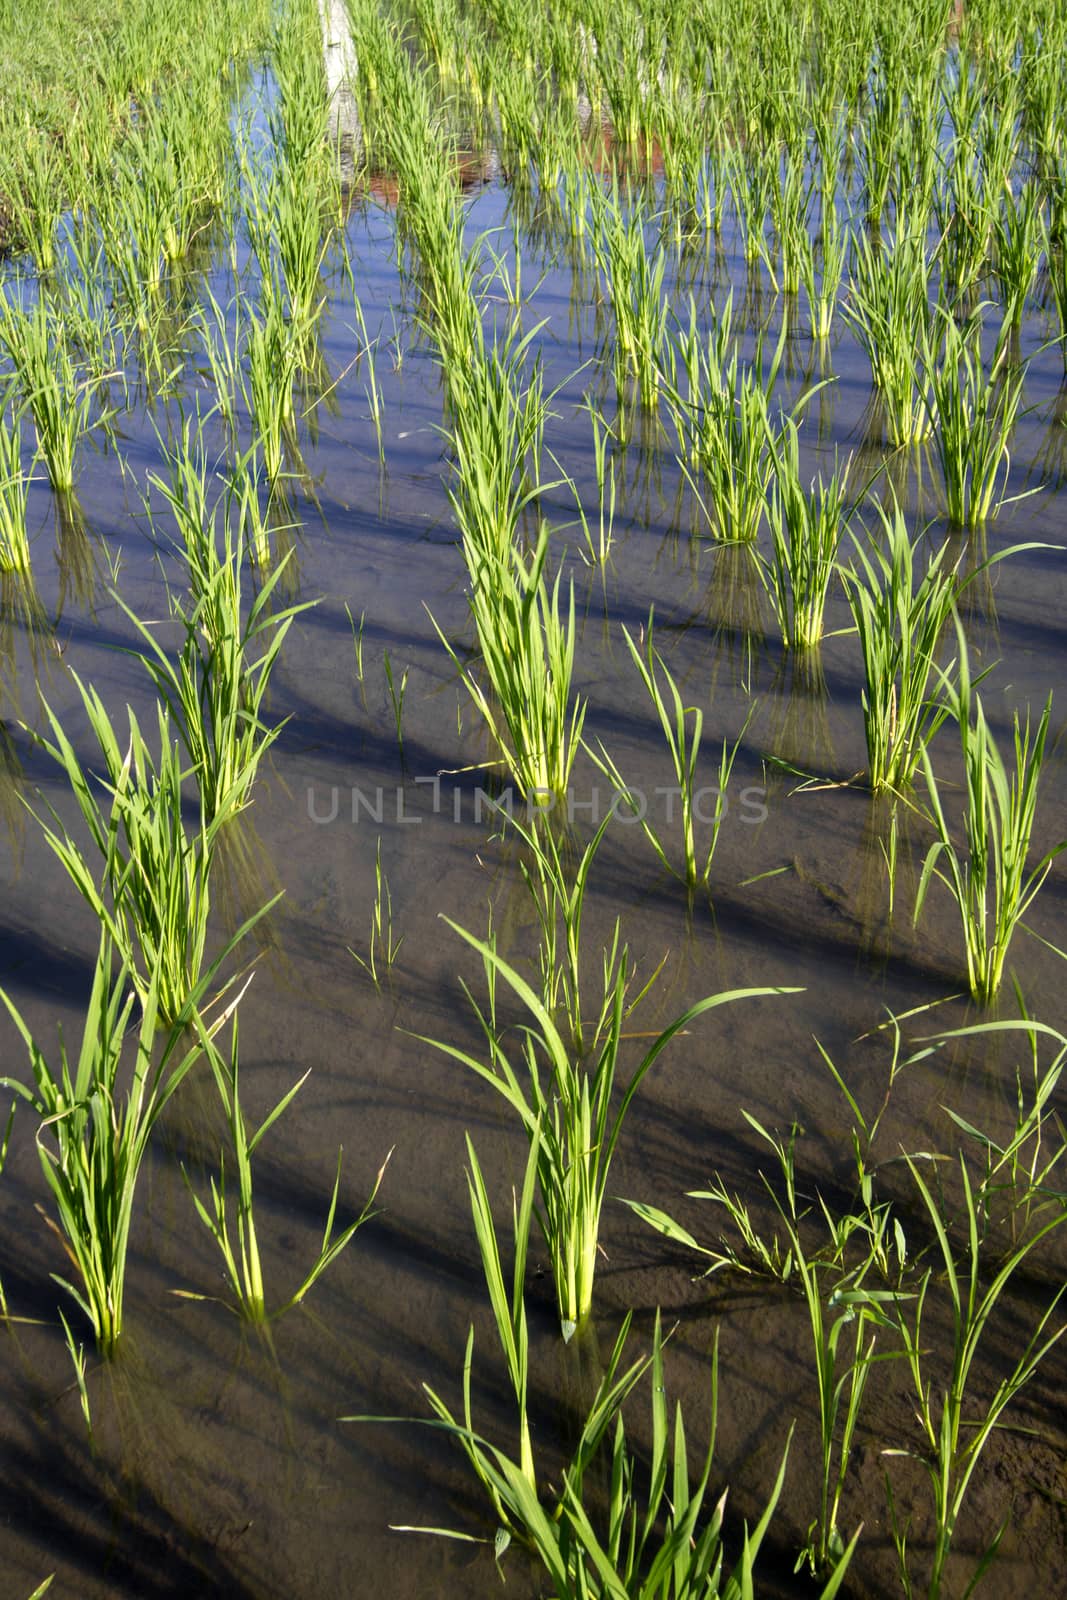 Rice Planting in Bali island, Indonesia.